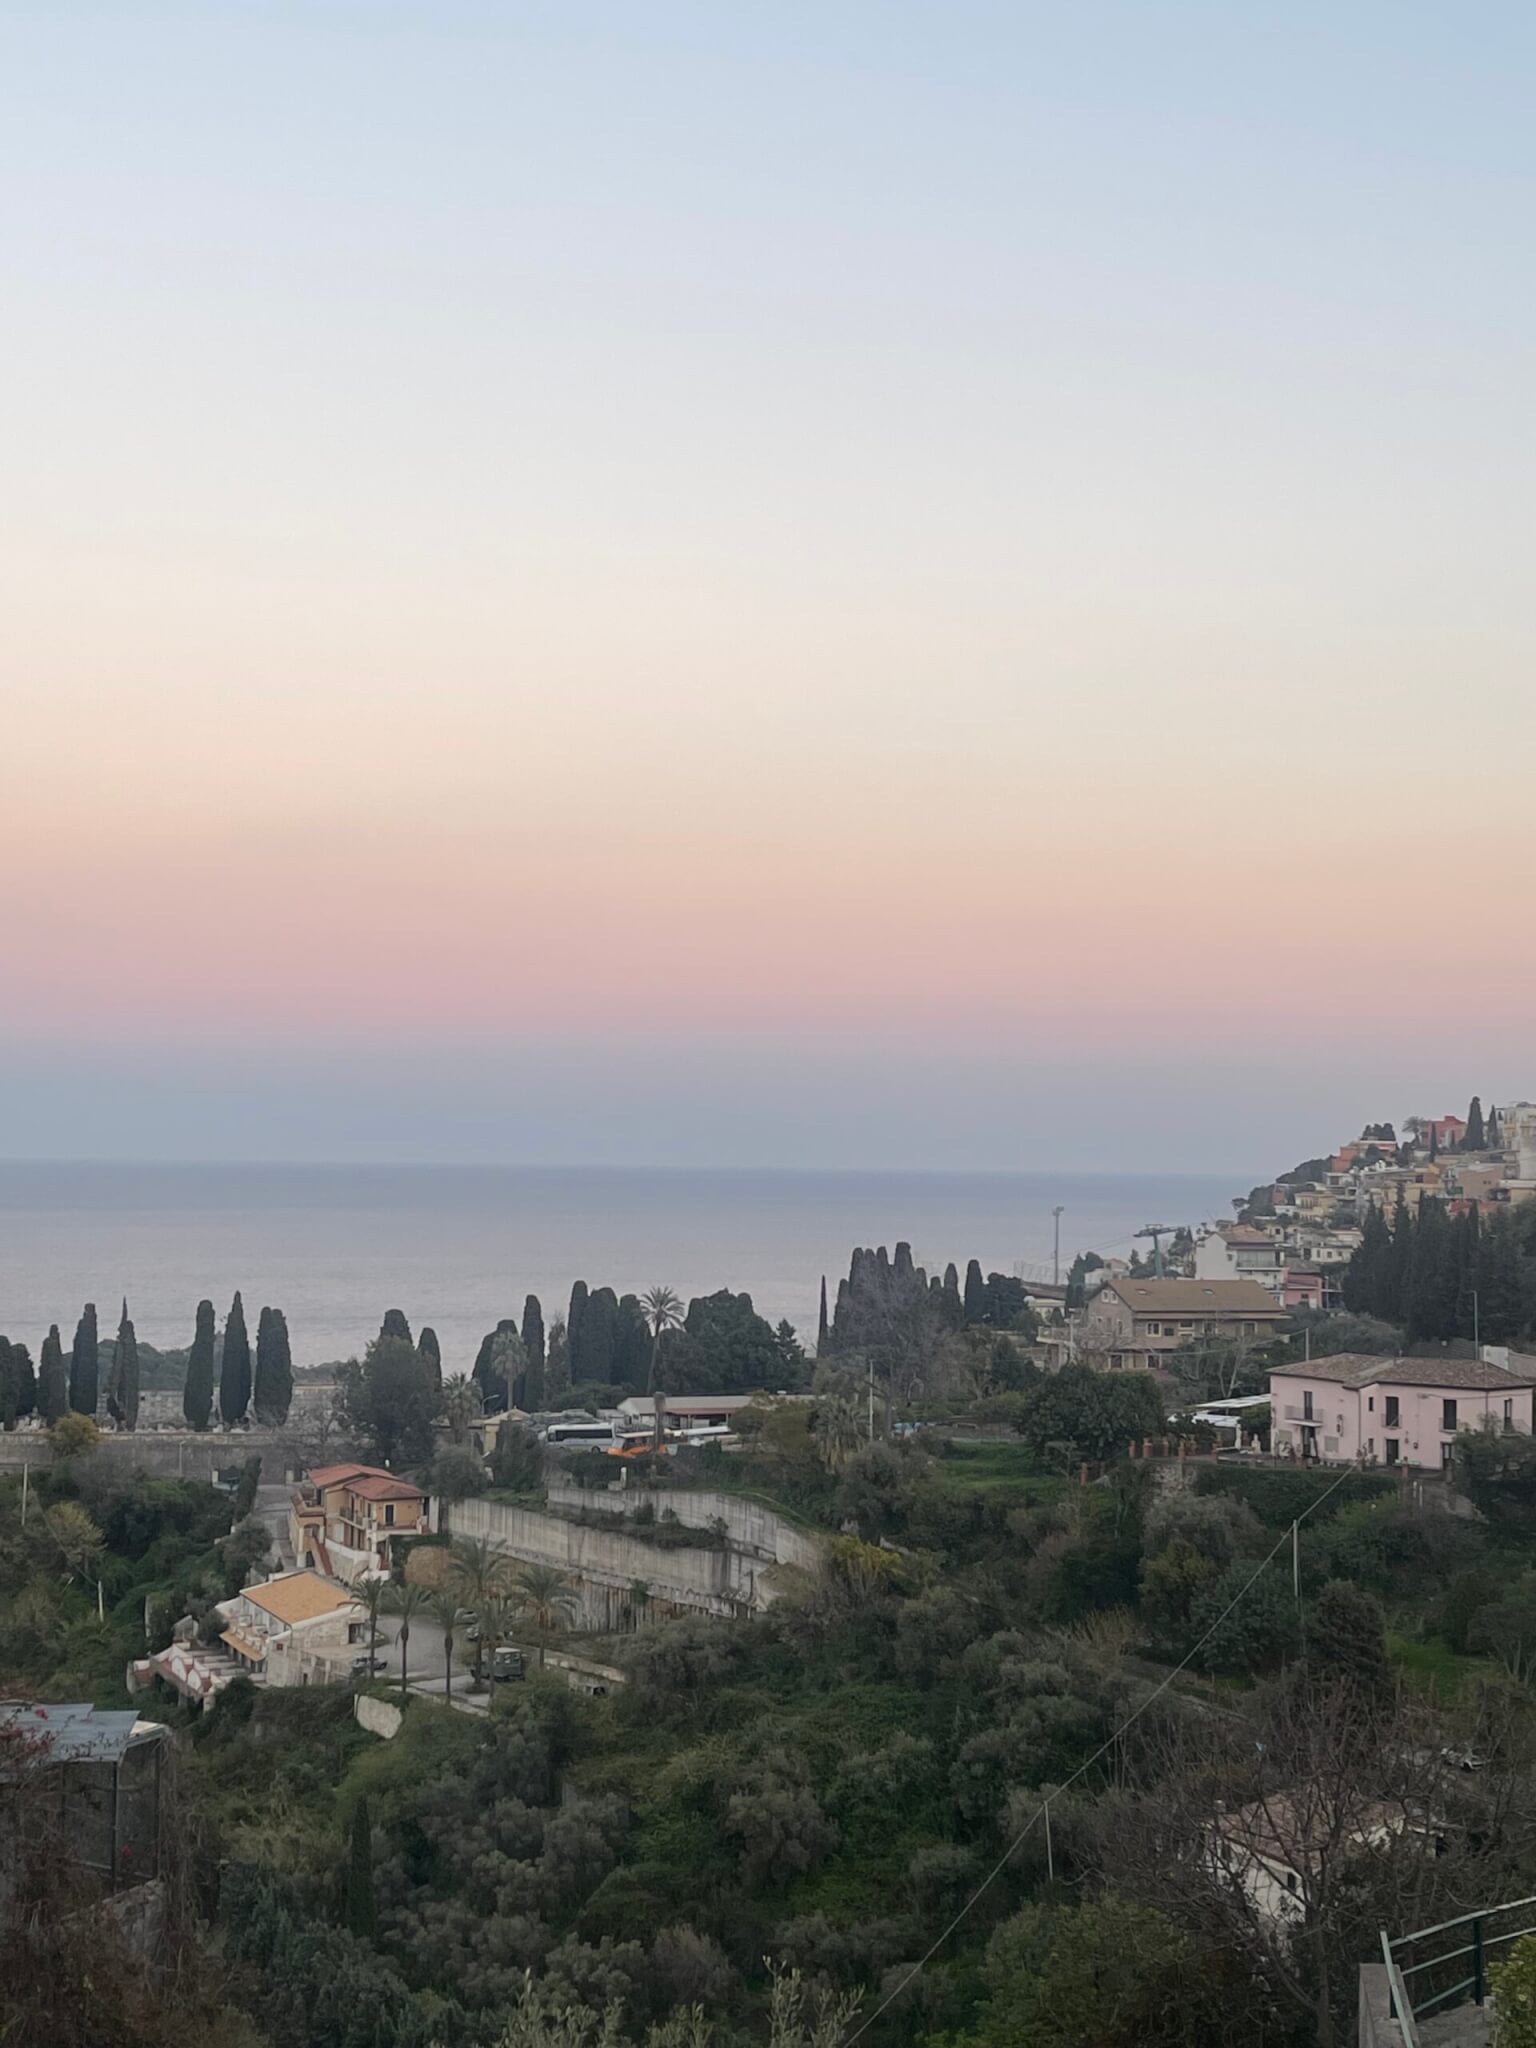 Views-of-Taormina-Issola-Bella-scaled Mystical Adventure Through Sun-Soaked Sicily